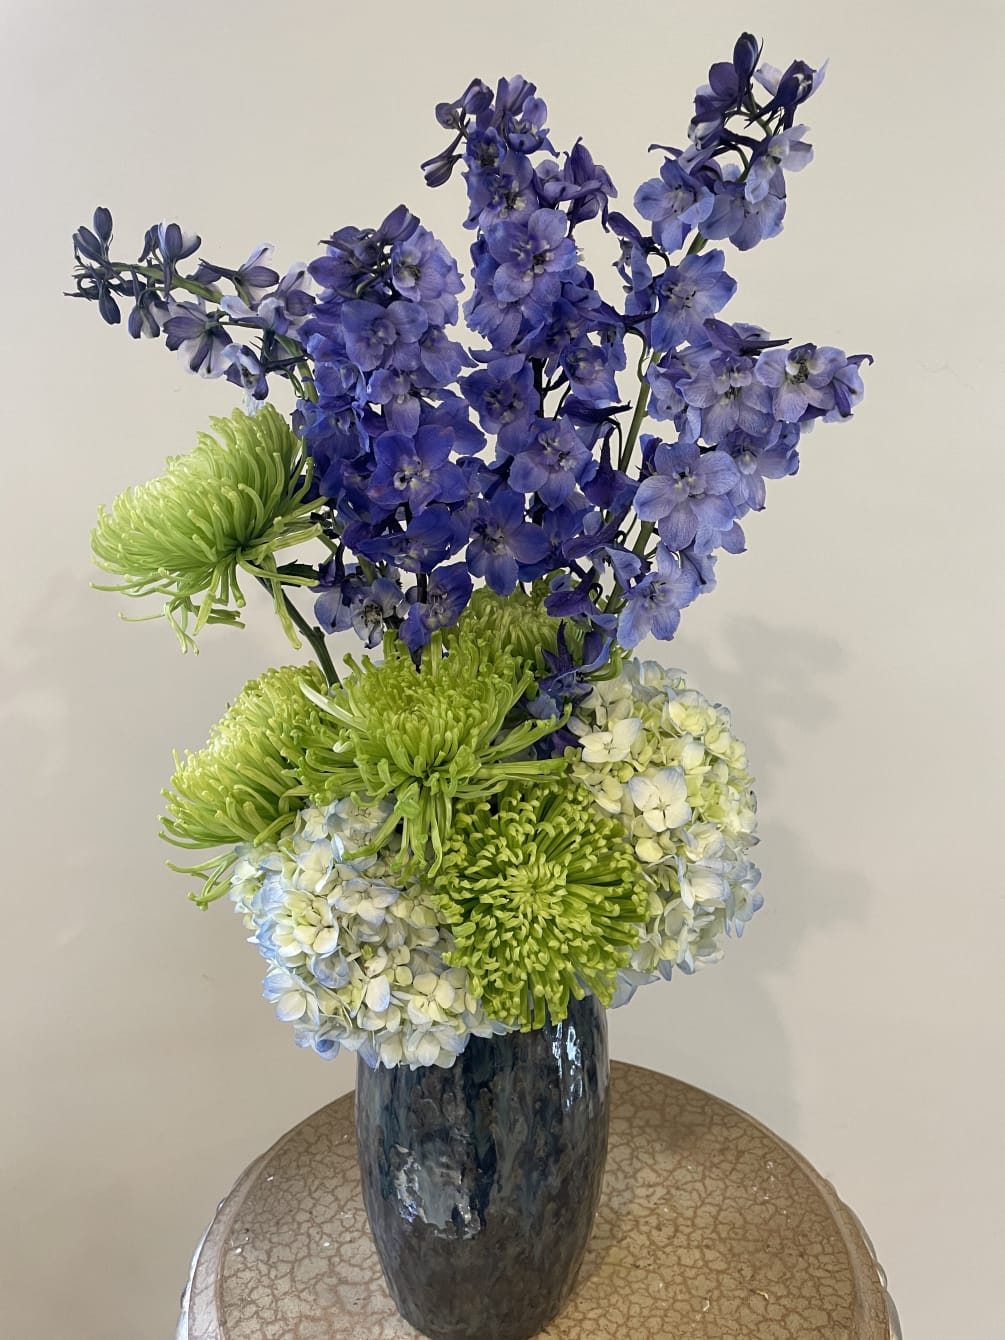 Blue hydrangeas, green chrysanthemums, purple delphinium